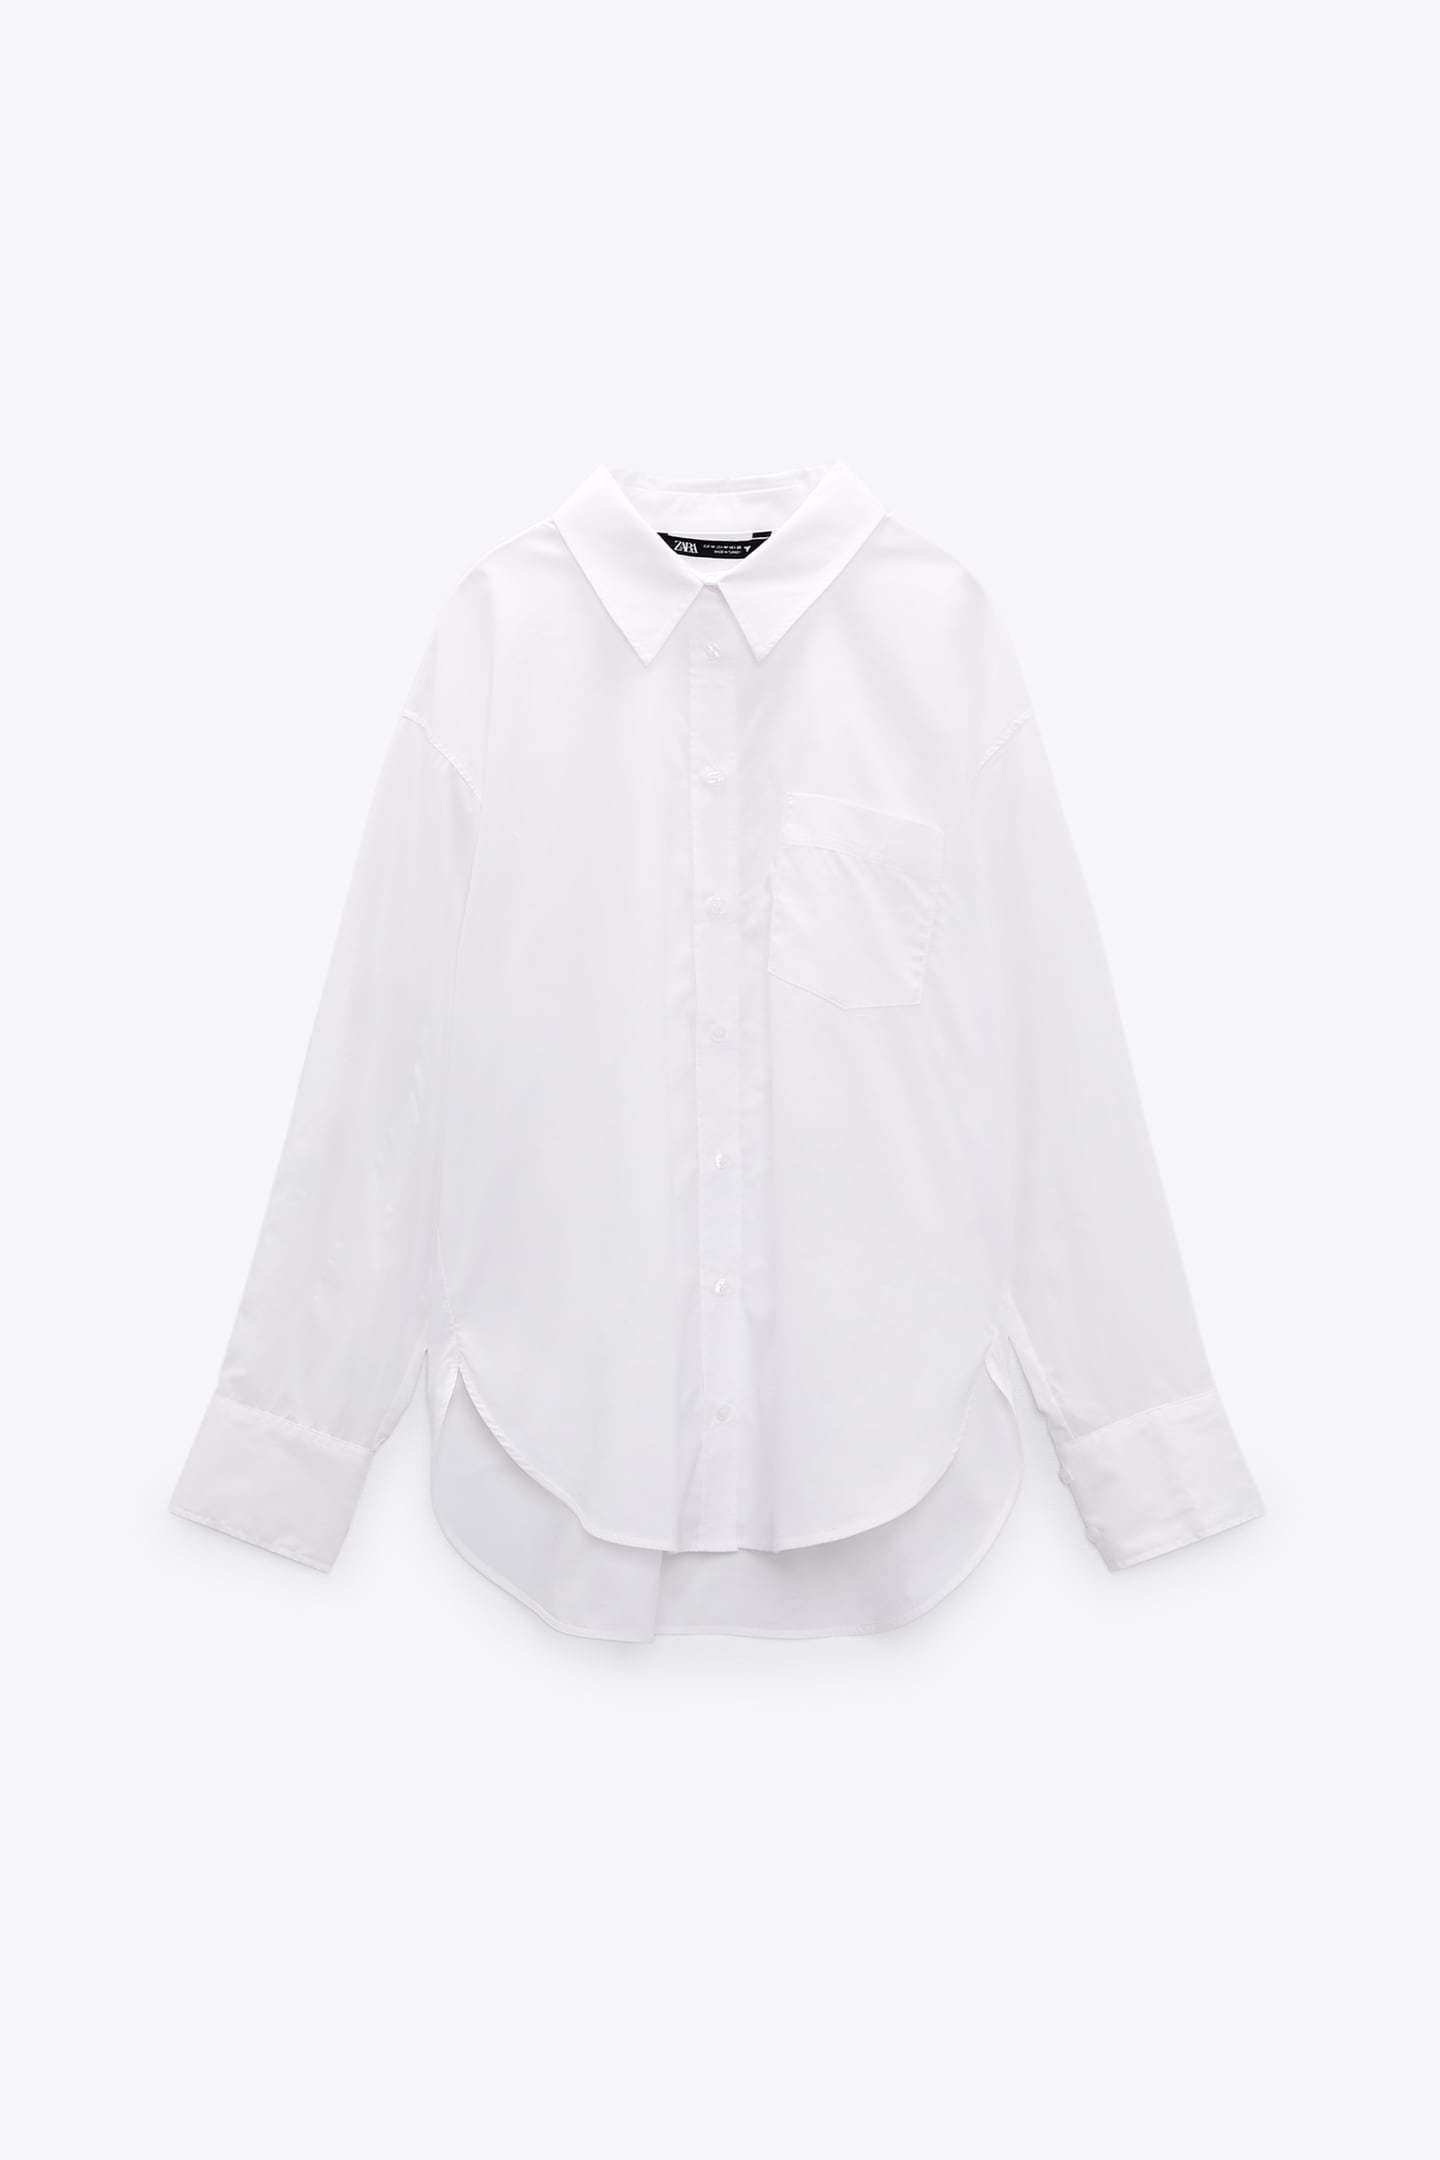 Camisa blanca de Zara.